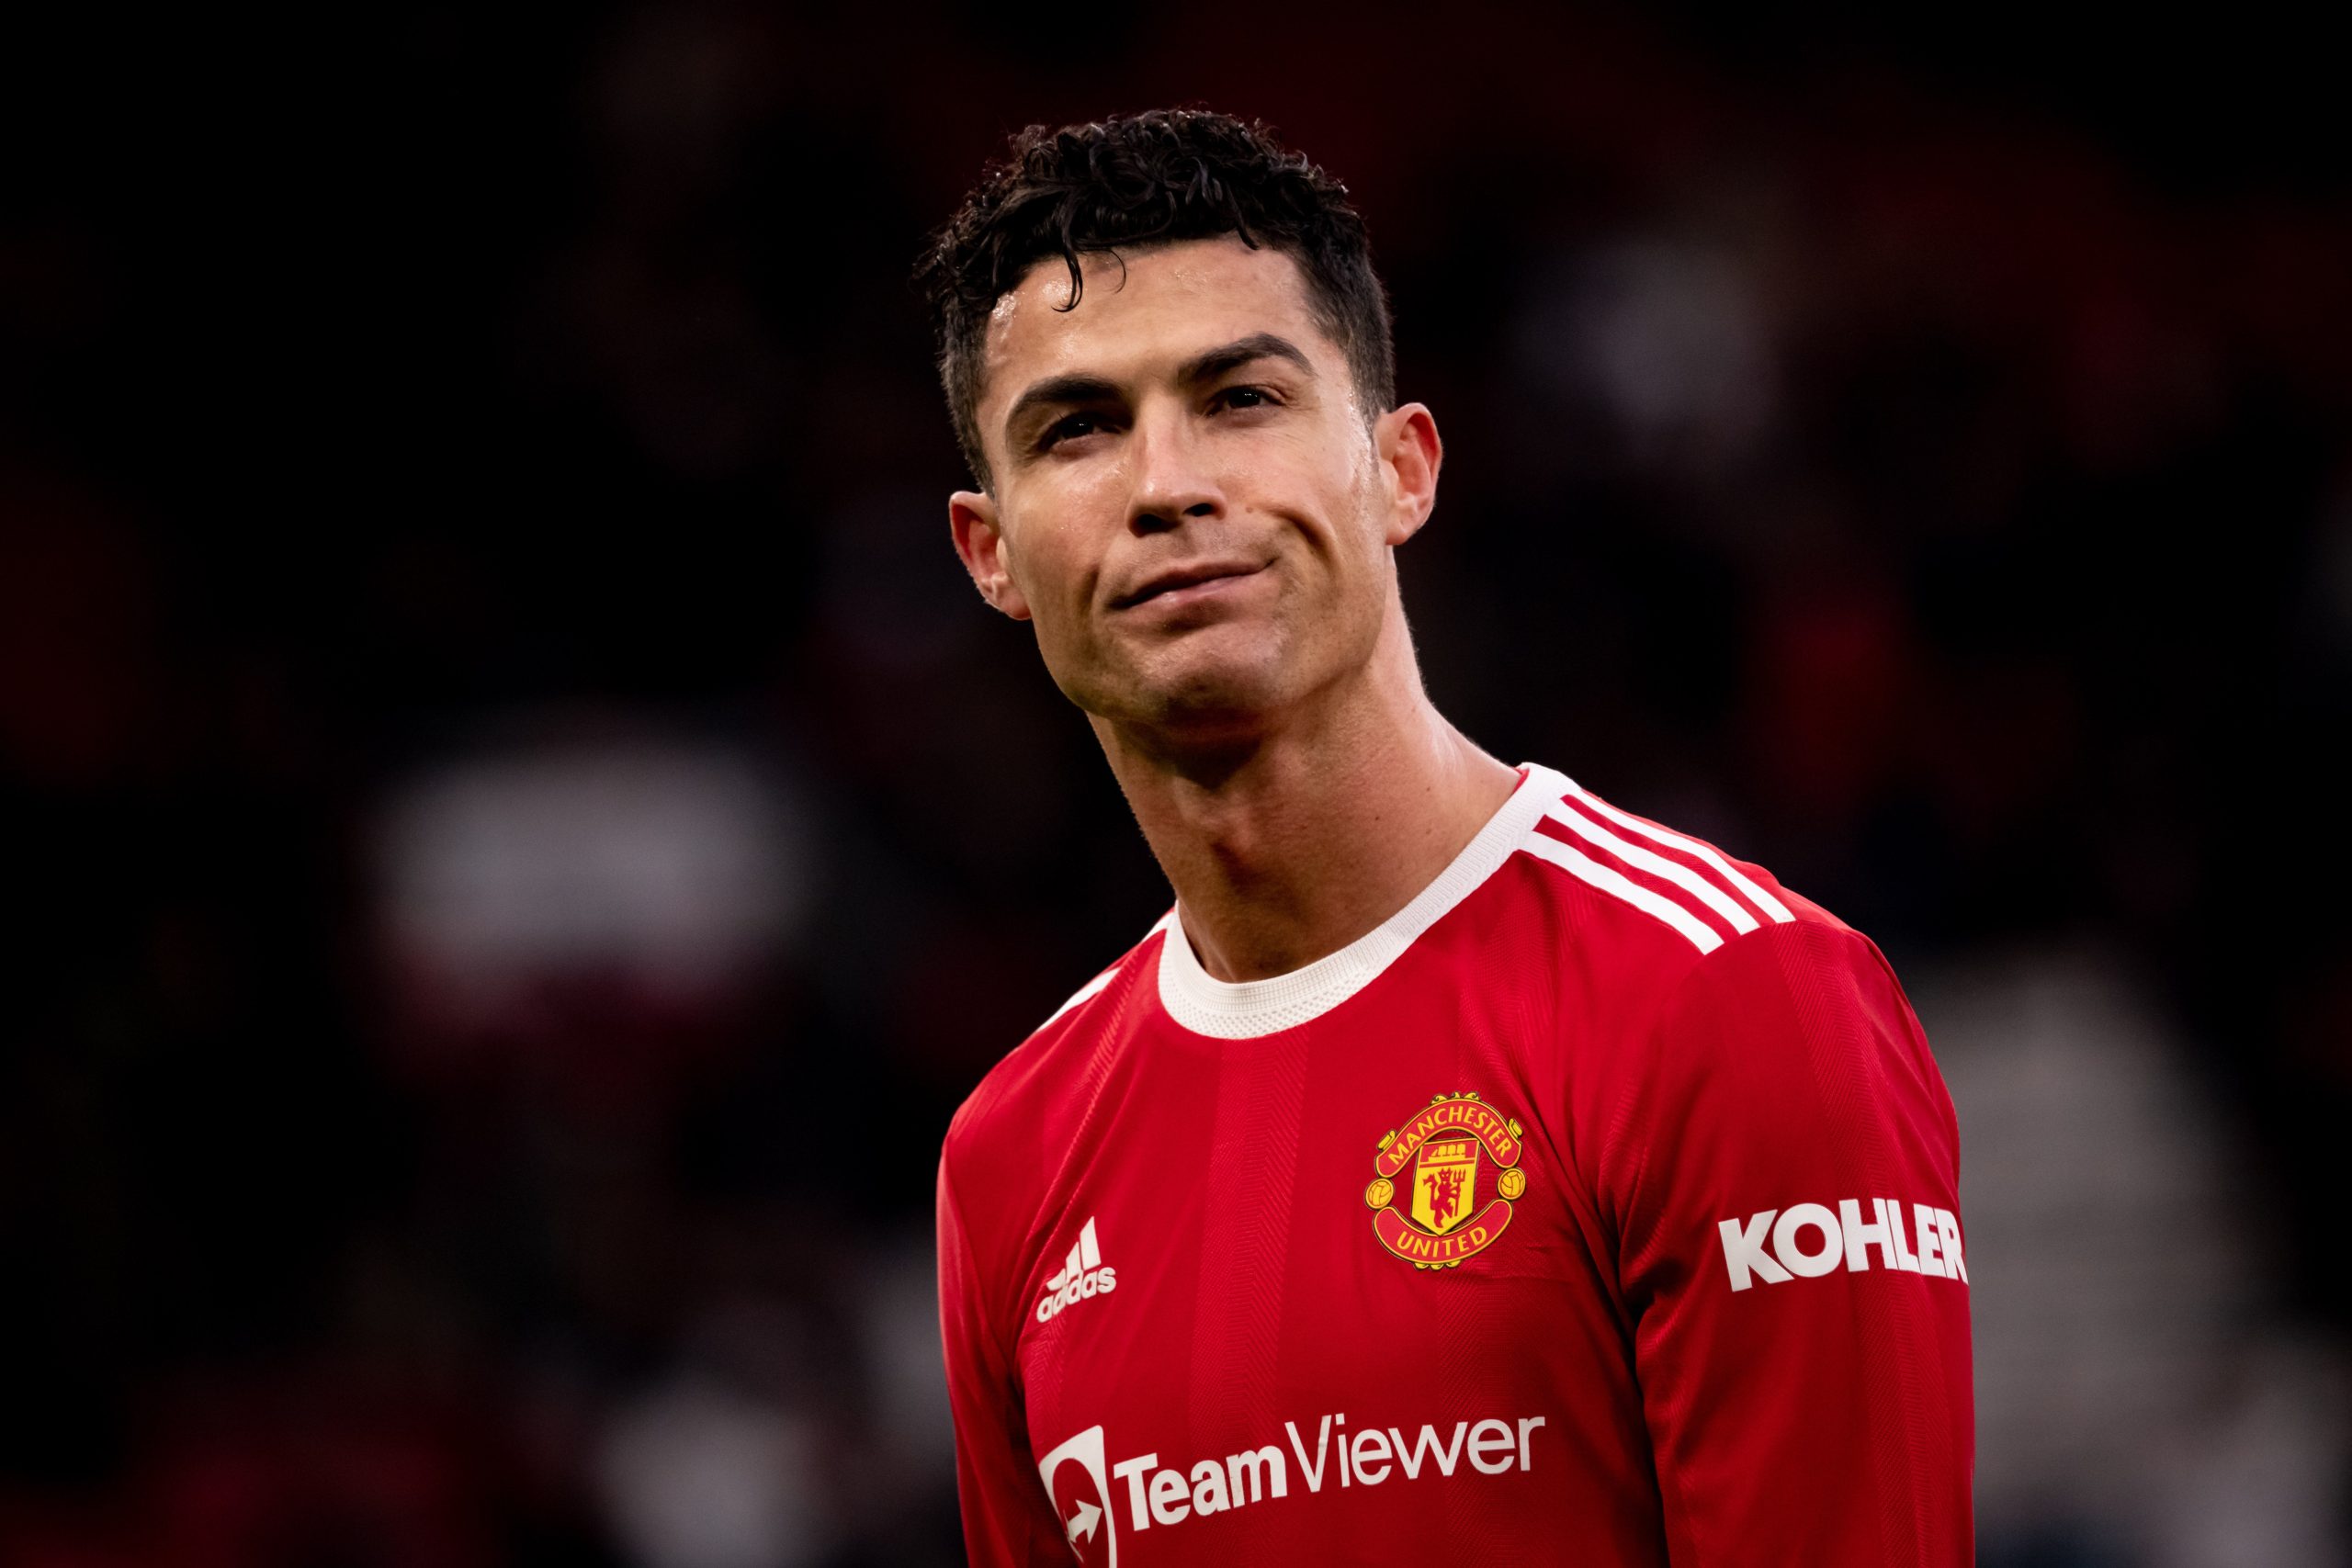 Tại sao Ronaldo rời Manchester United